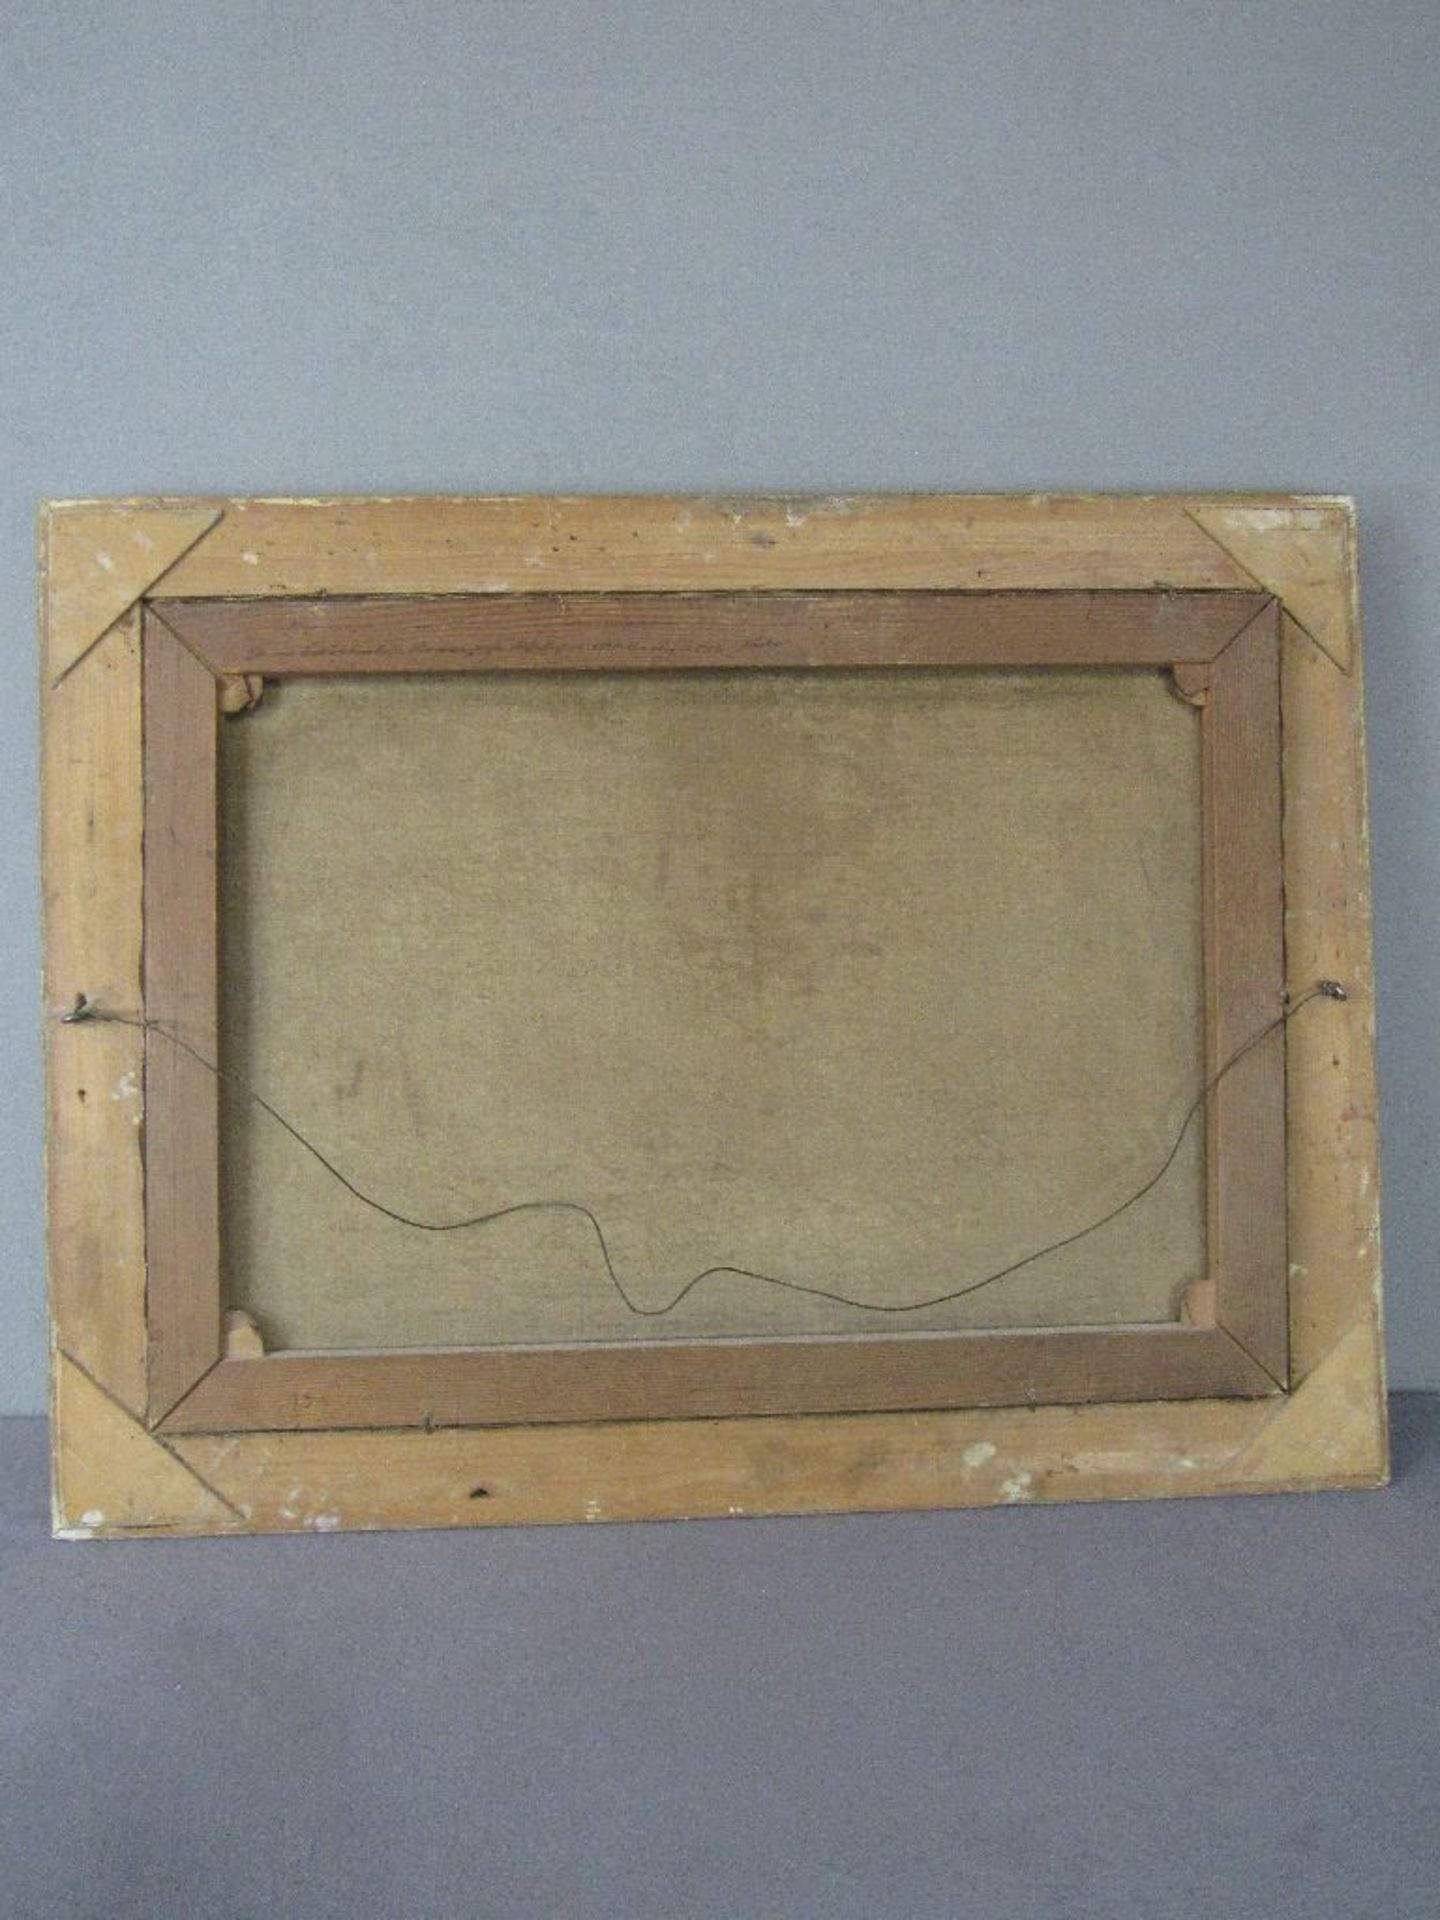 Ölgemälde Öl auf Leinwand rückseitig Rahmen datierung 1900 sowie Signatur Dammbruch 91x70cm - Image 7 of 10